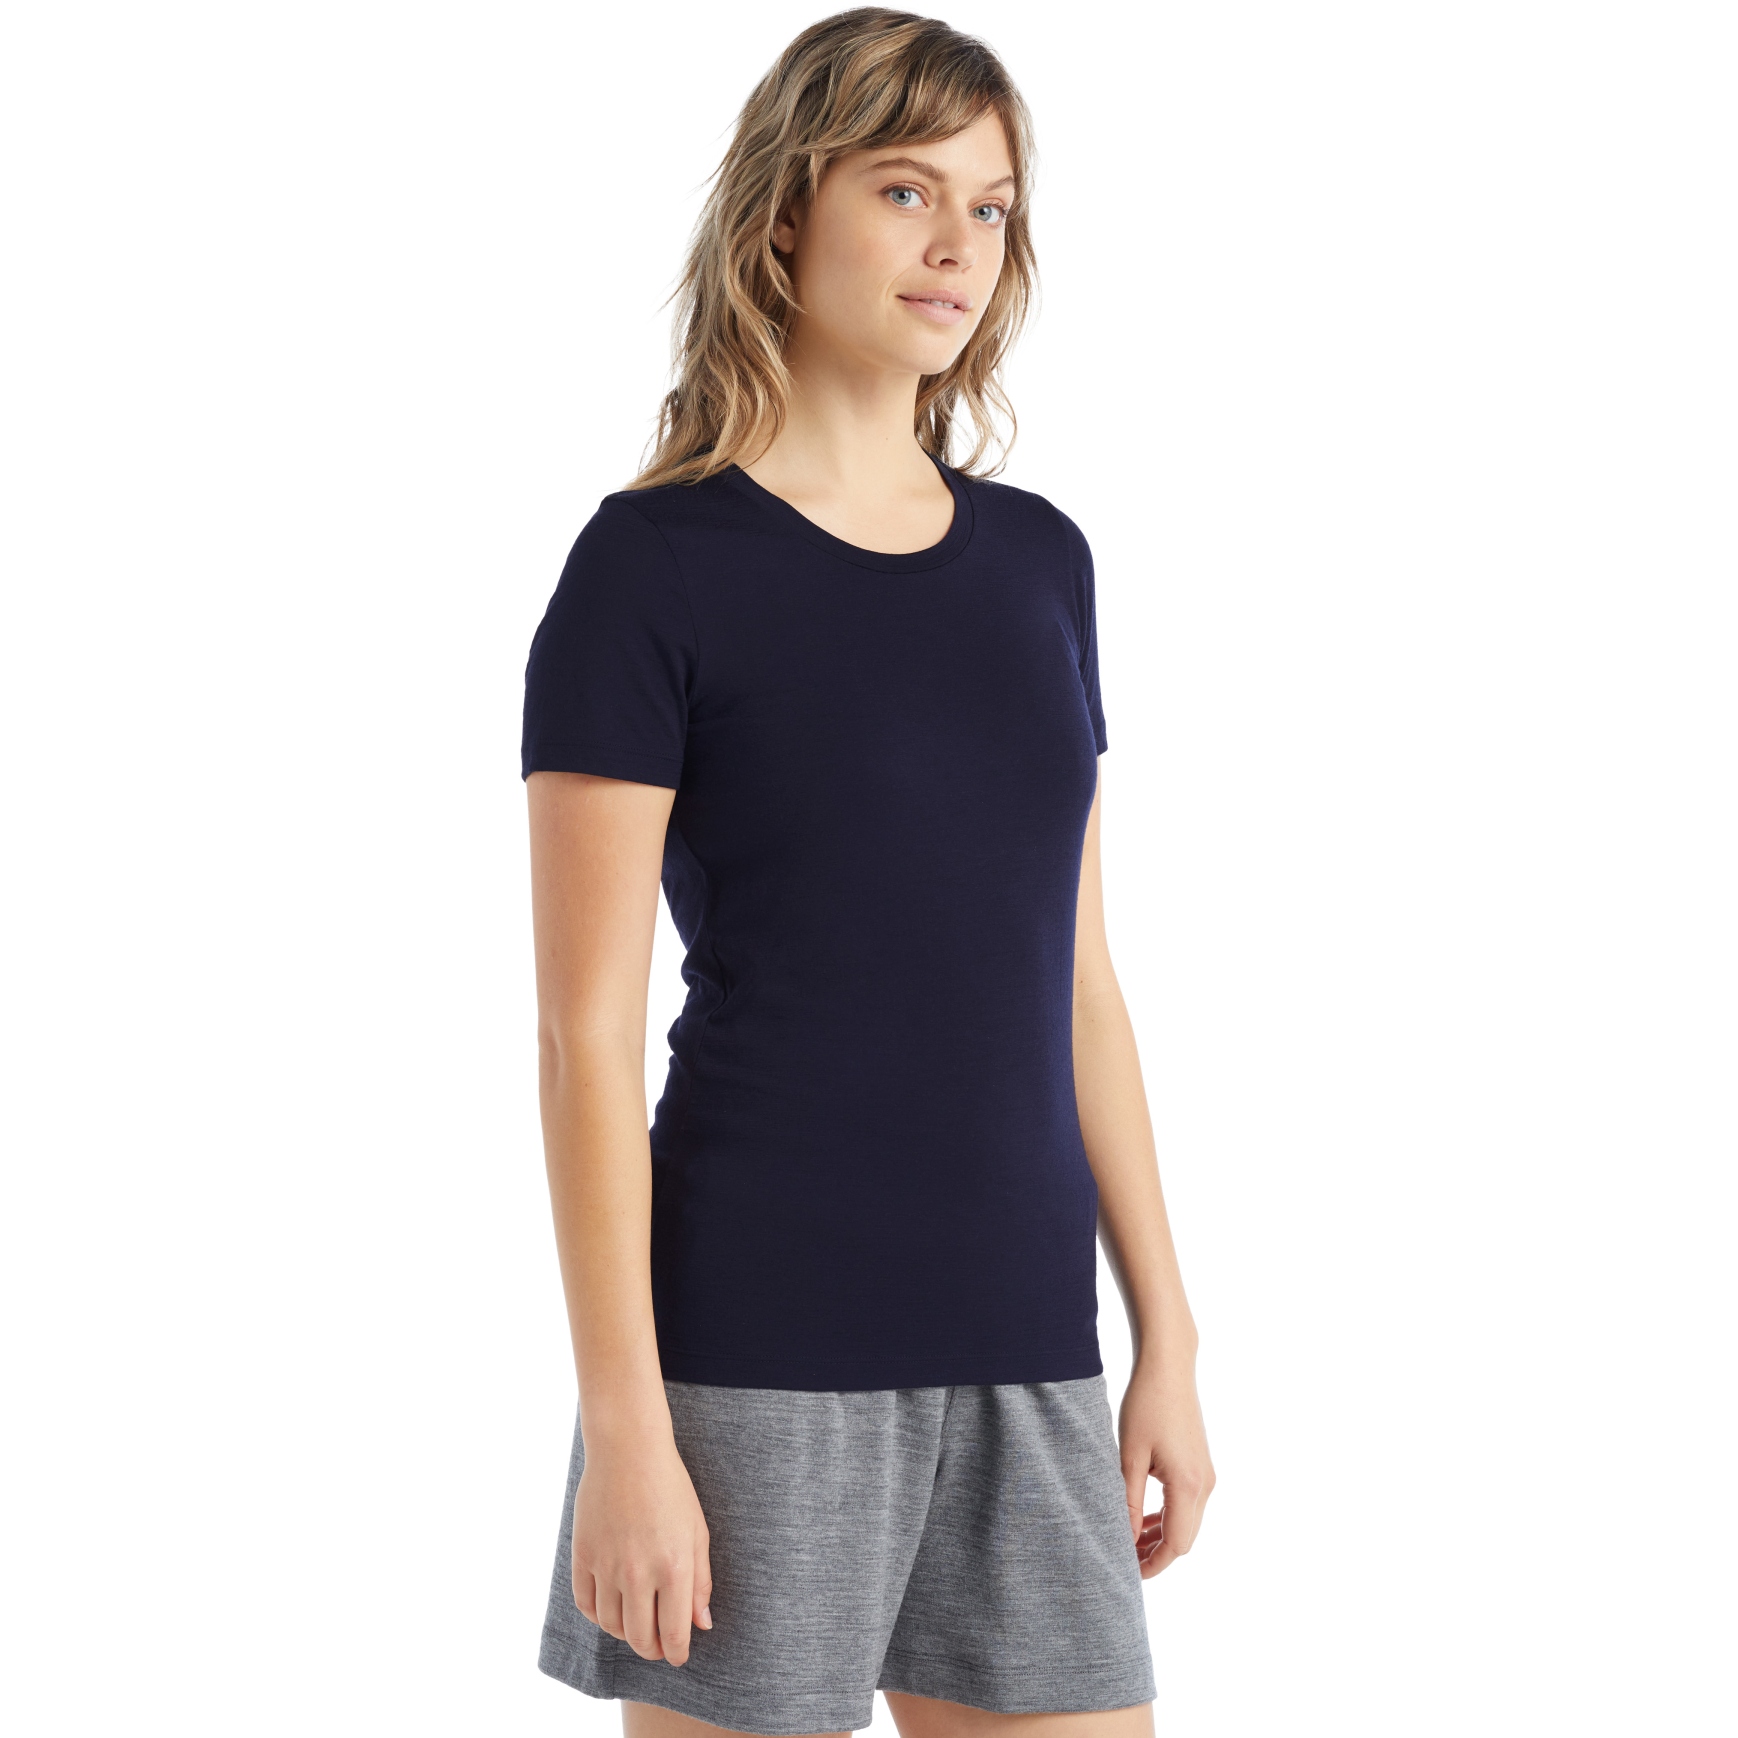 Image of Icebreaker Women's Tech Lite II T-Shirt - Midnight Navy